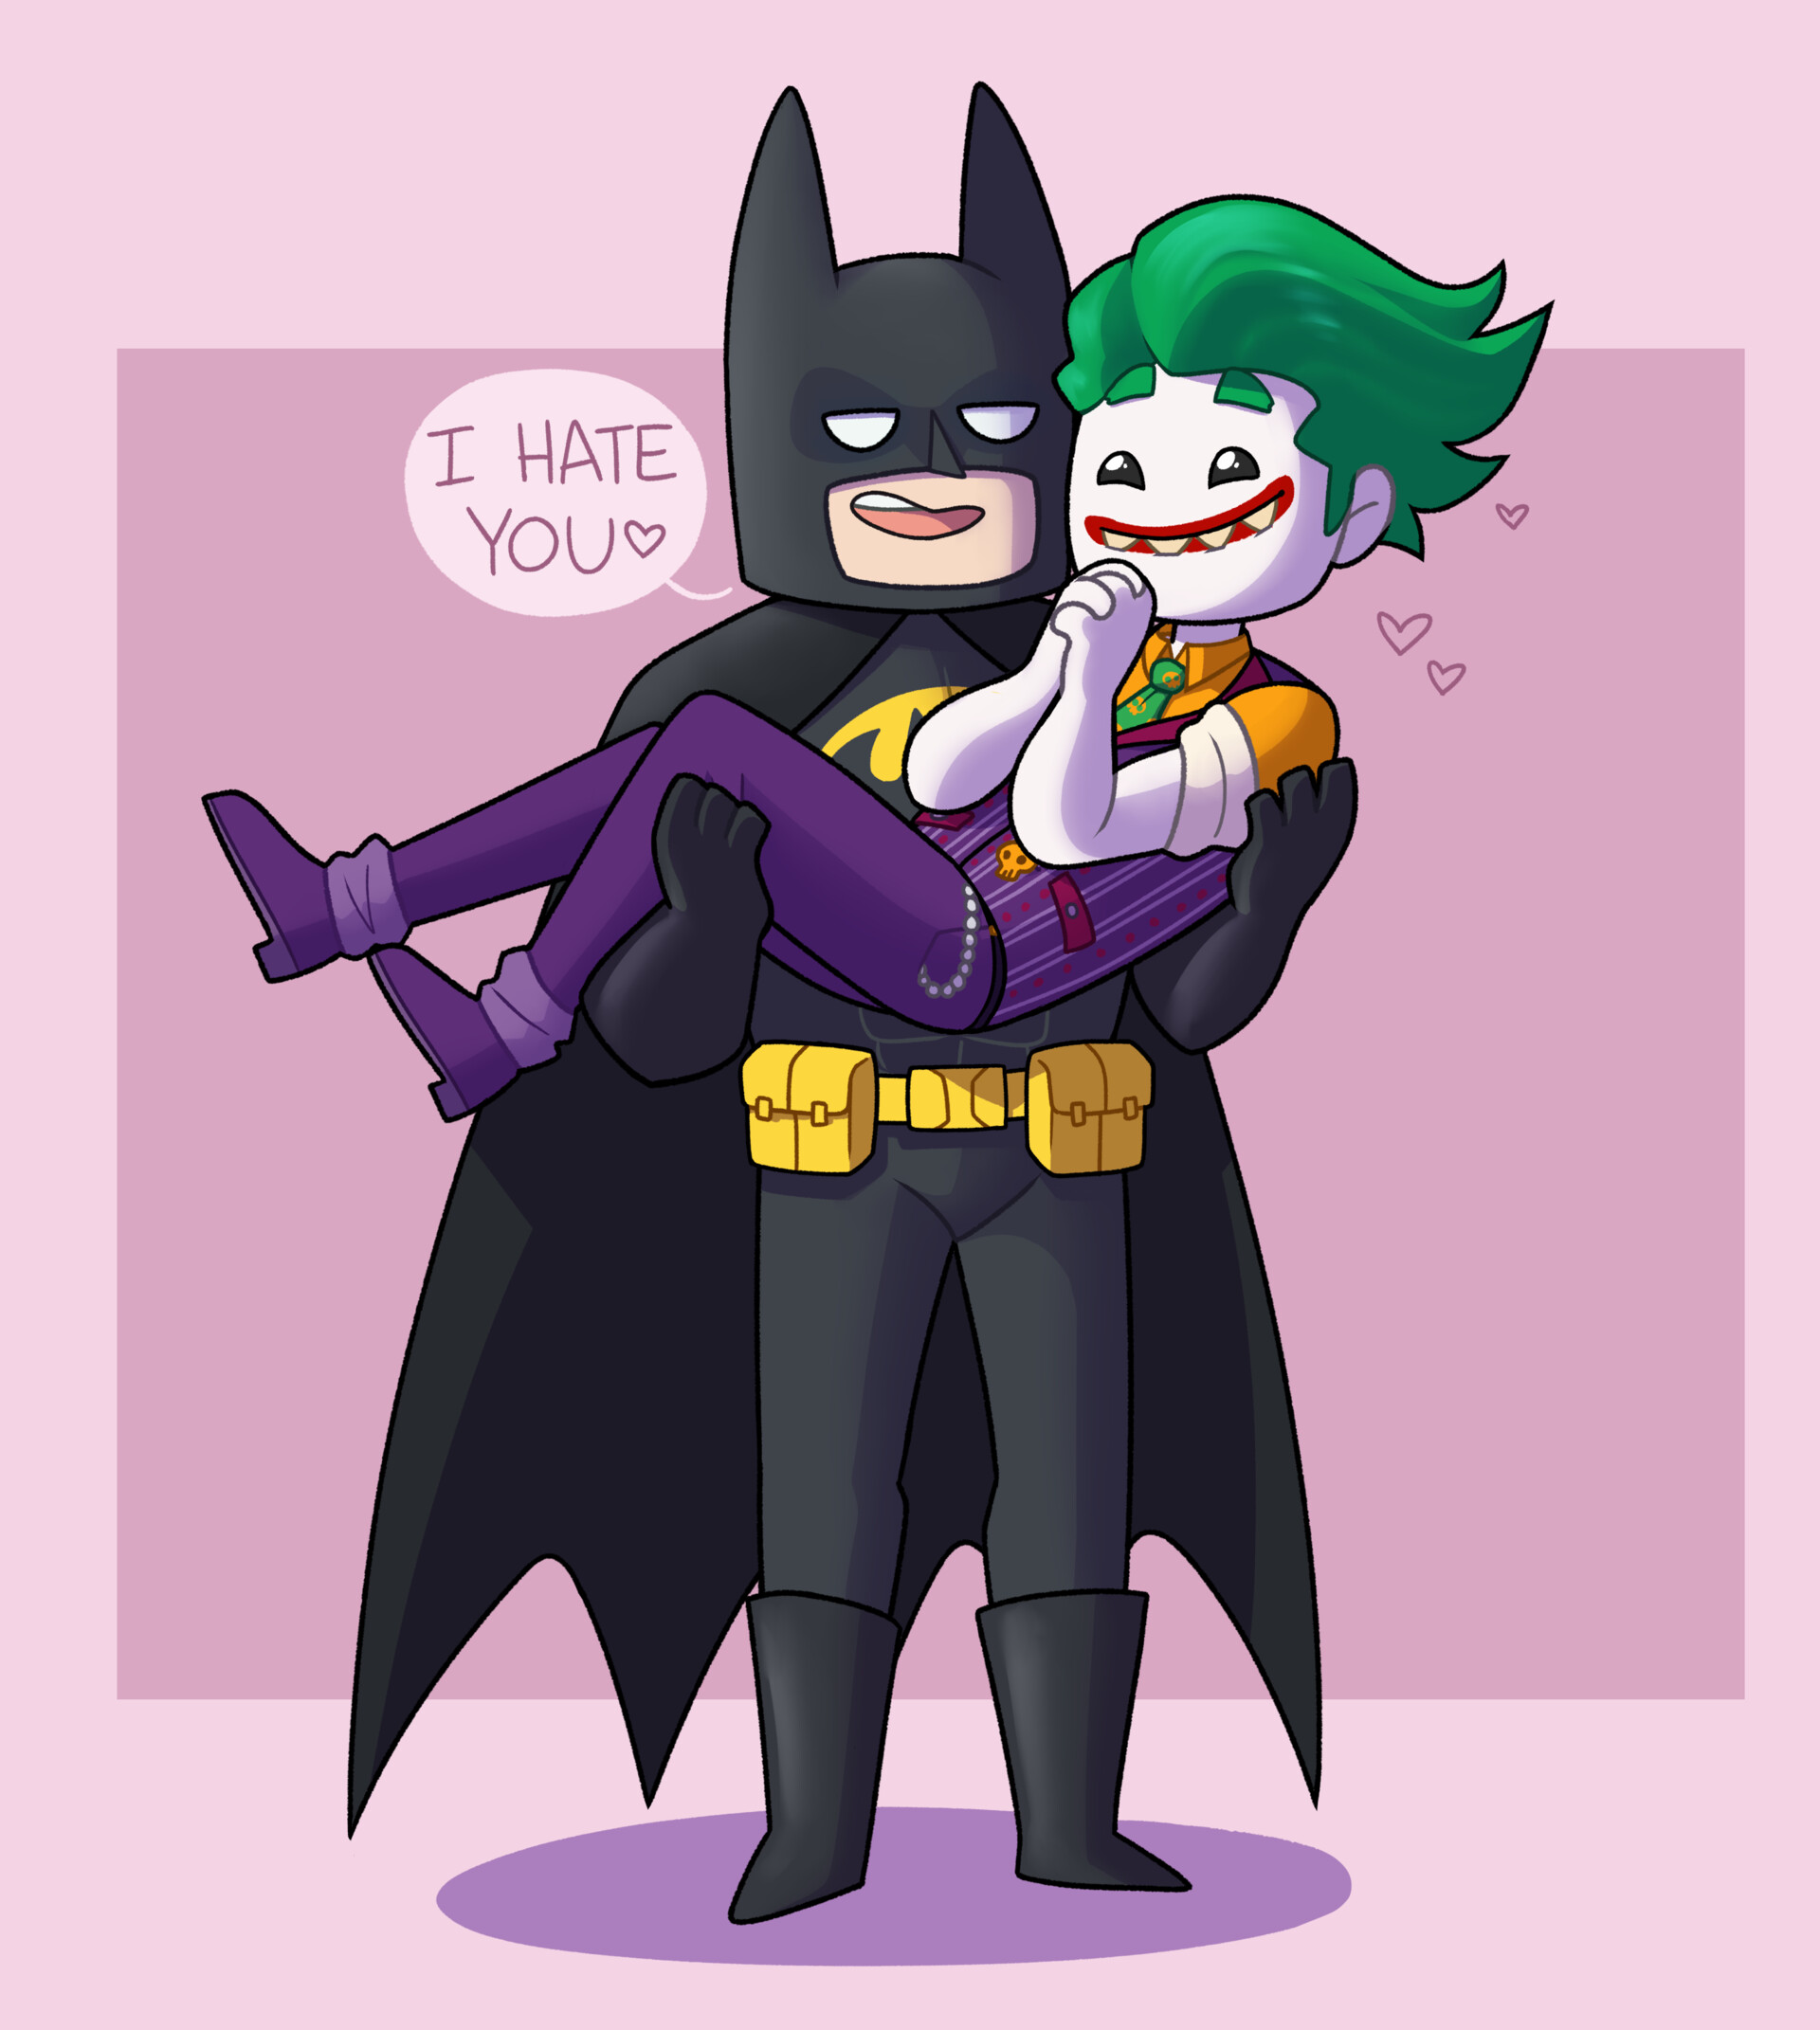 ArtStation - Lego Batman and Joker Fanart